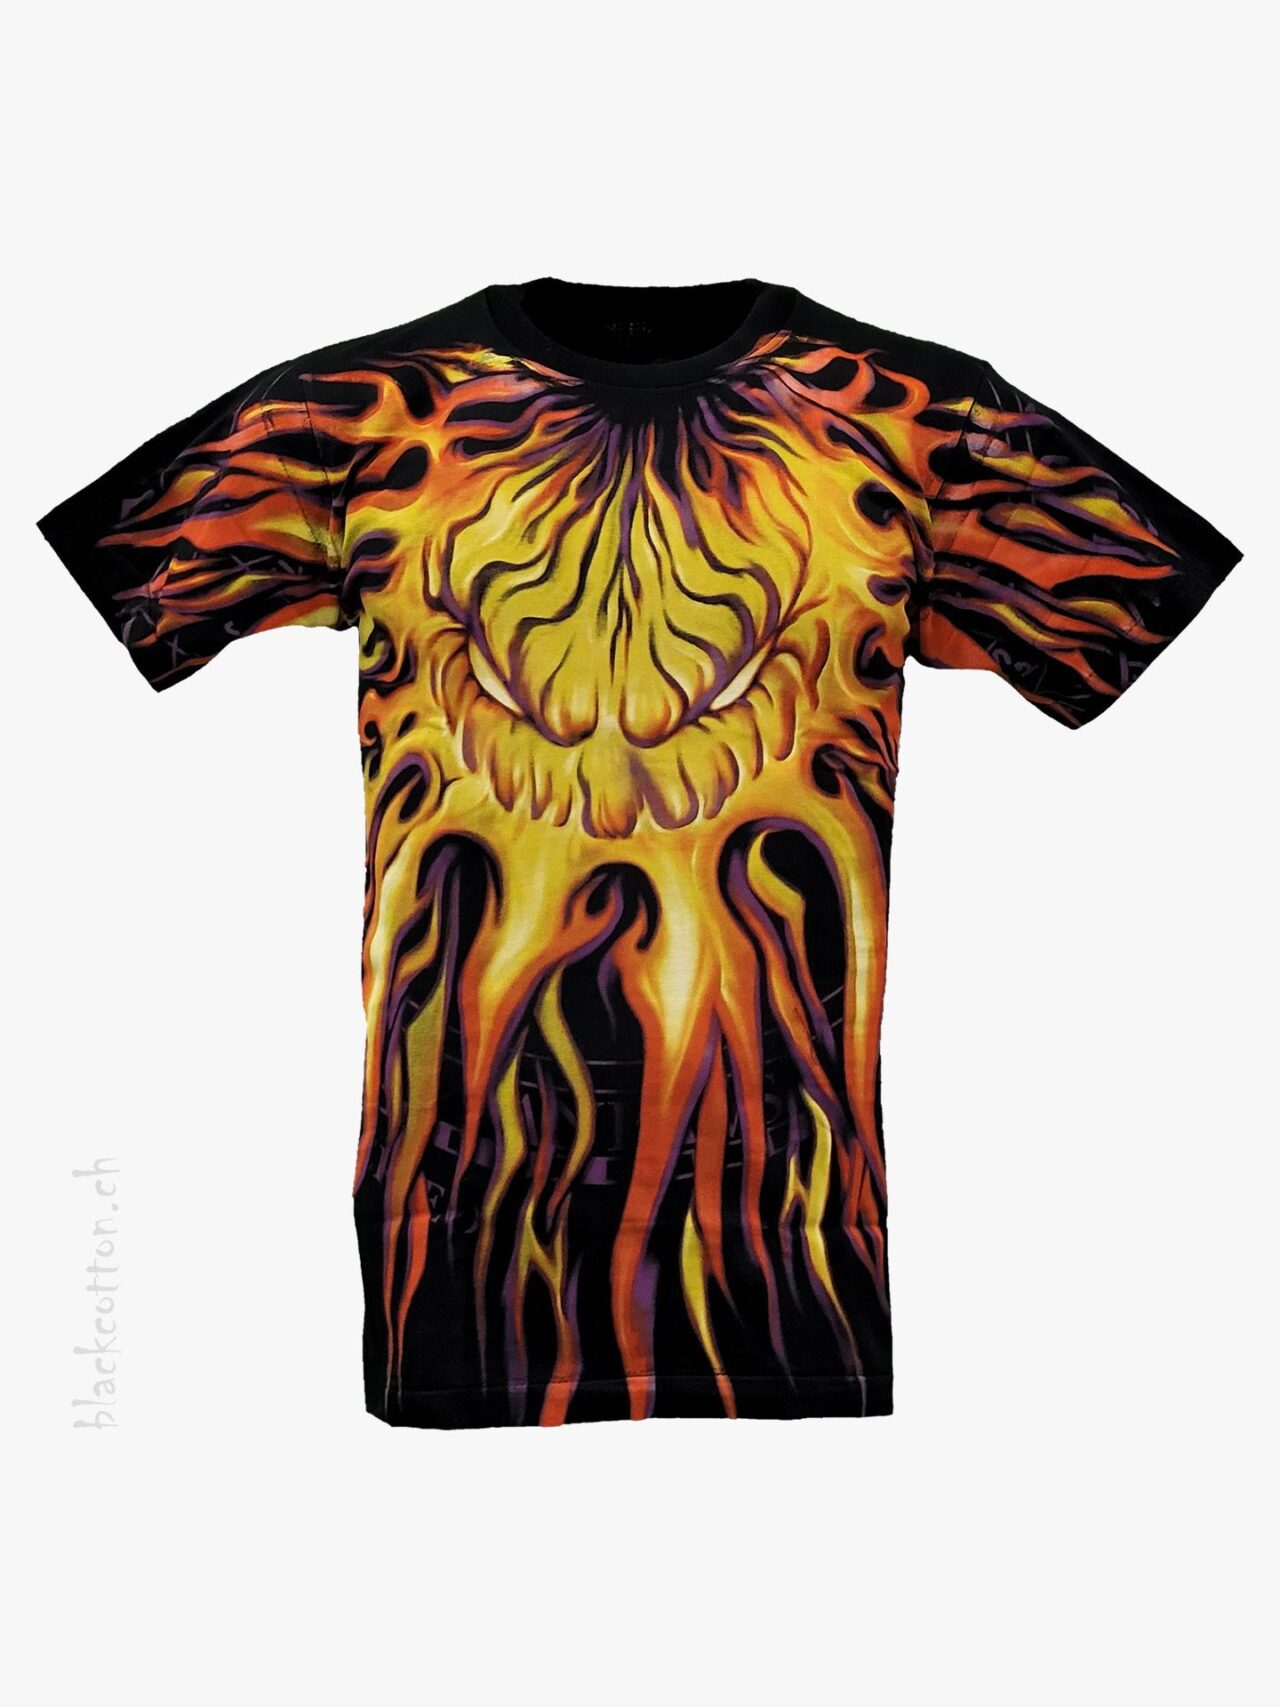 T-Shirt Feuerteufel Flammen ROCK EAGLE 1026T